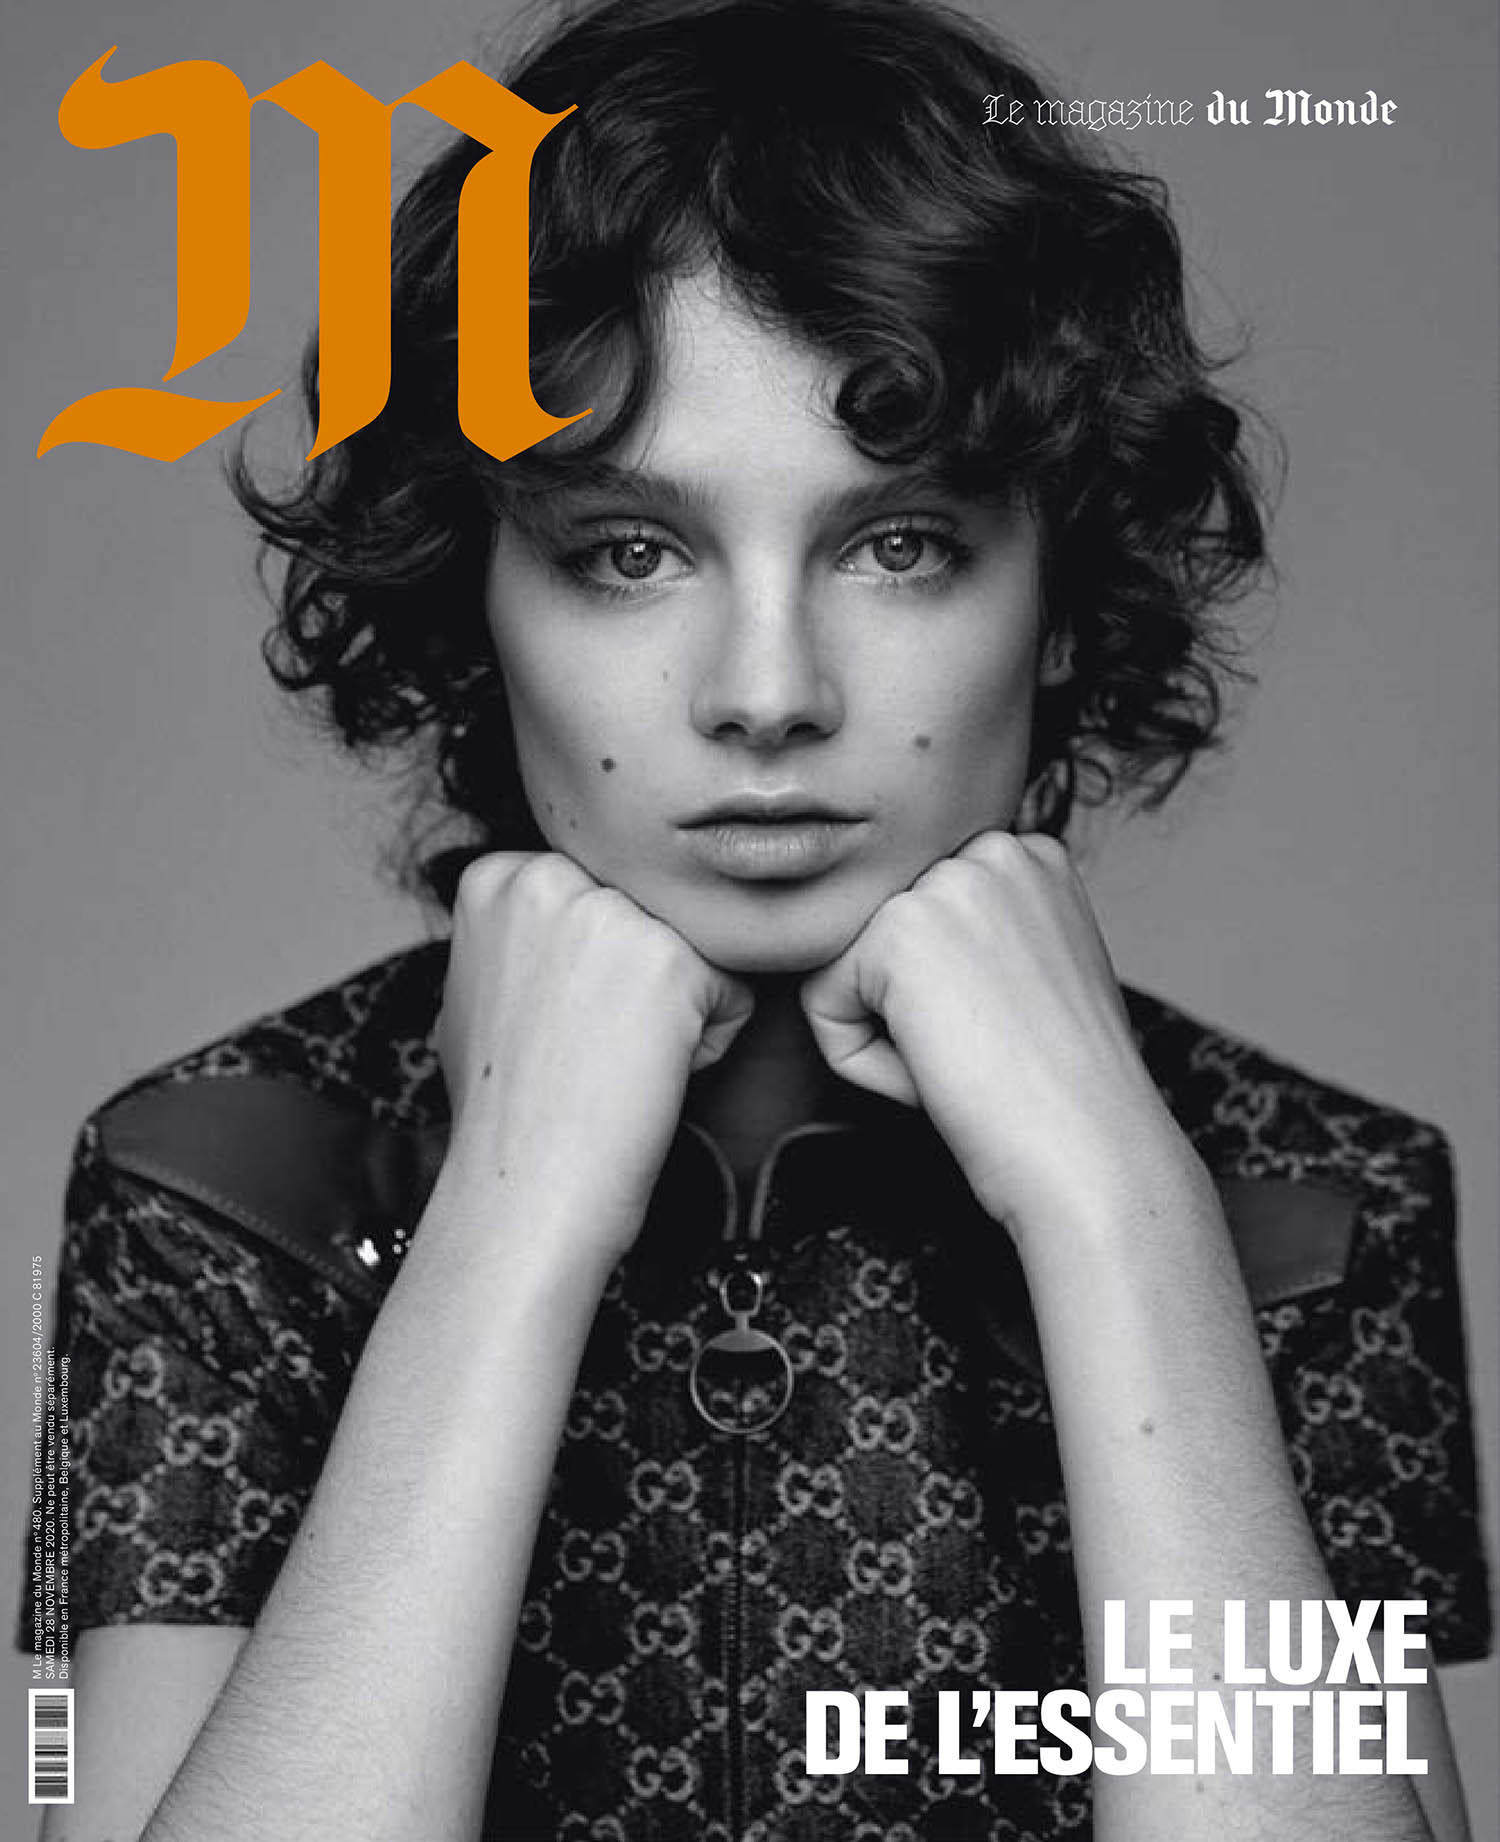 Giselle Norman covers M Le magazine du Monde November 28th, 2020 by Alasdair McLellan